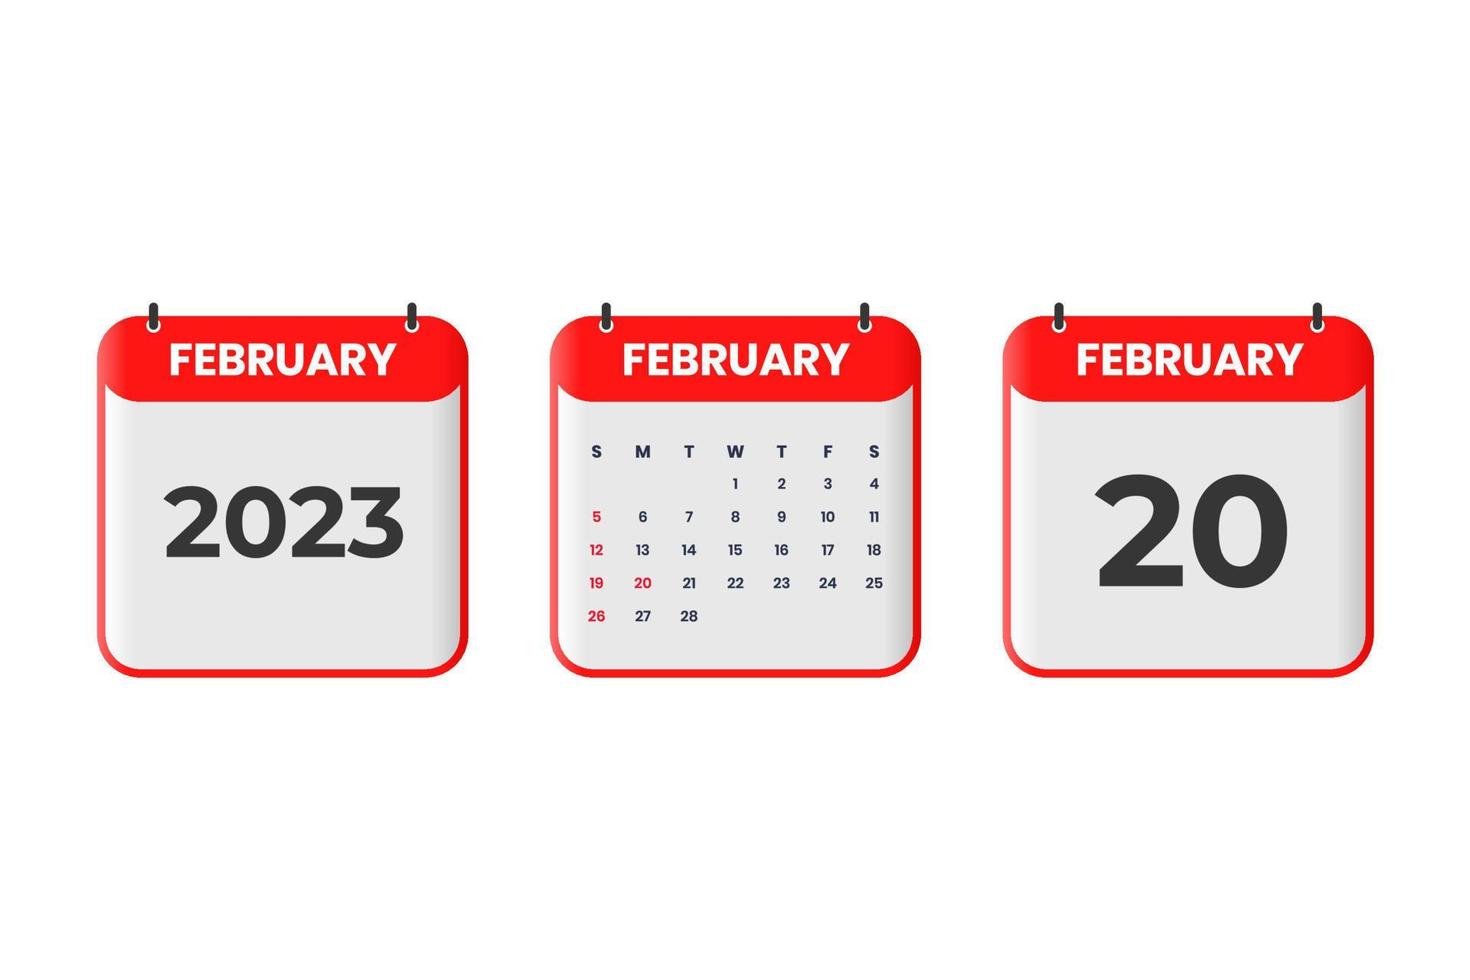 diseño de calendario de febrero de 2023. 20 de febrero de 2023 icono de calendario para horario, cita, concepto de fecha importante vector